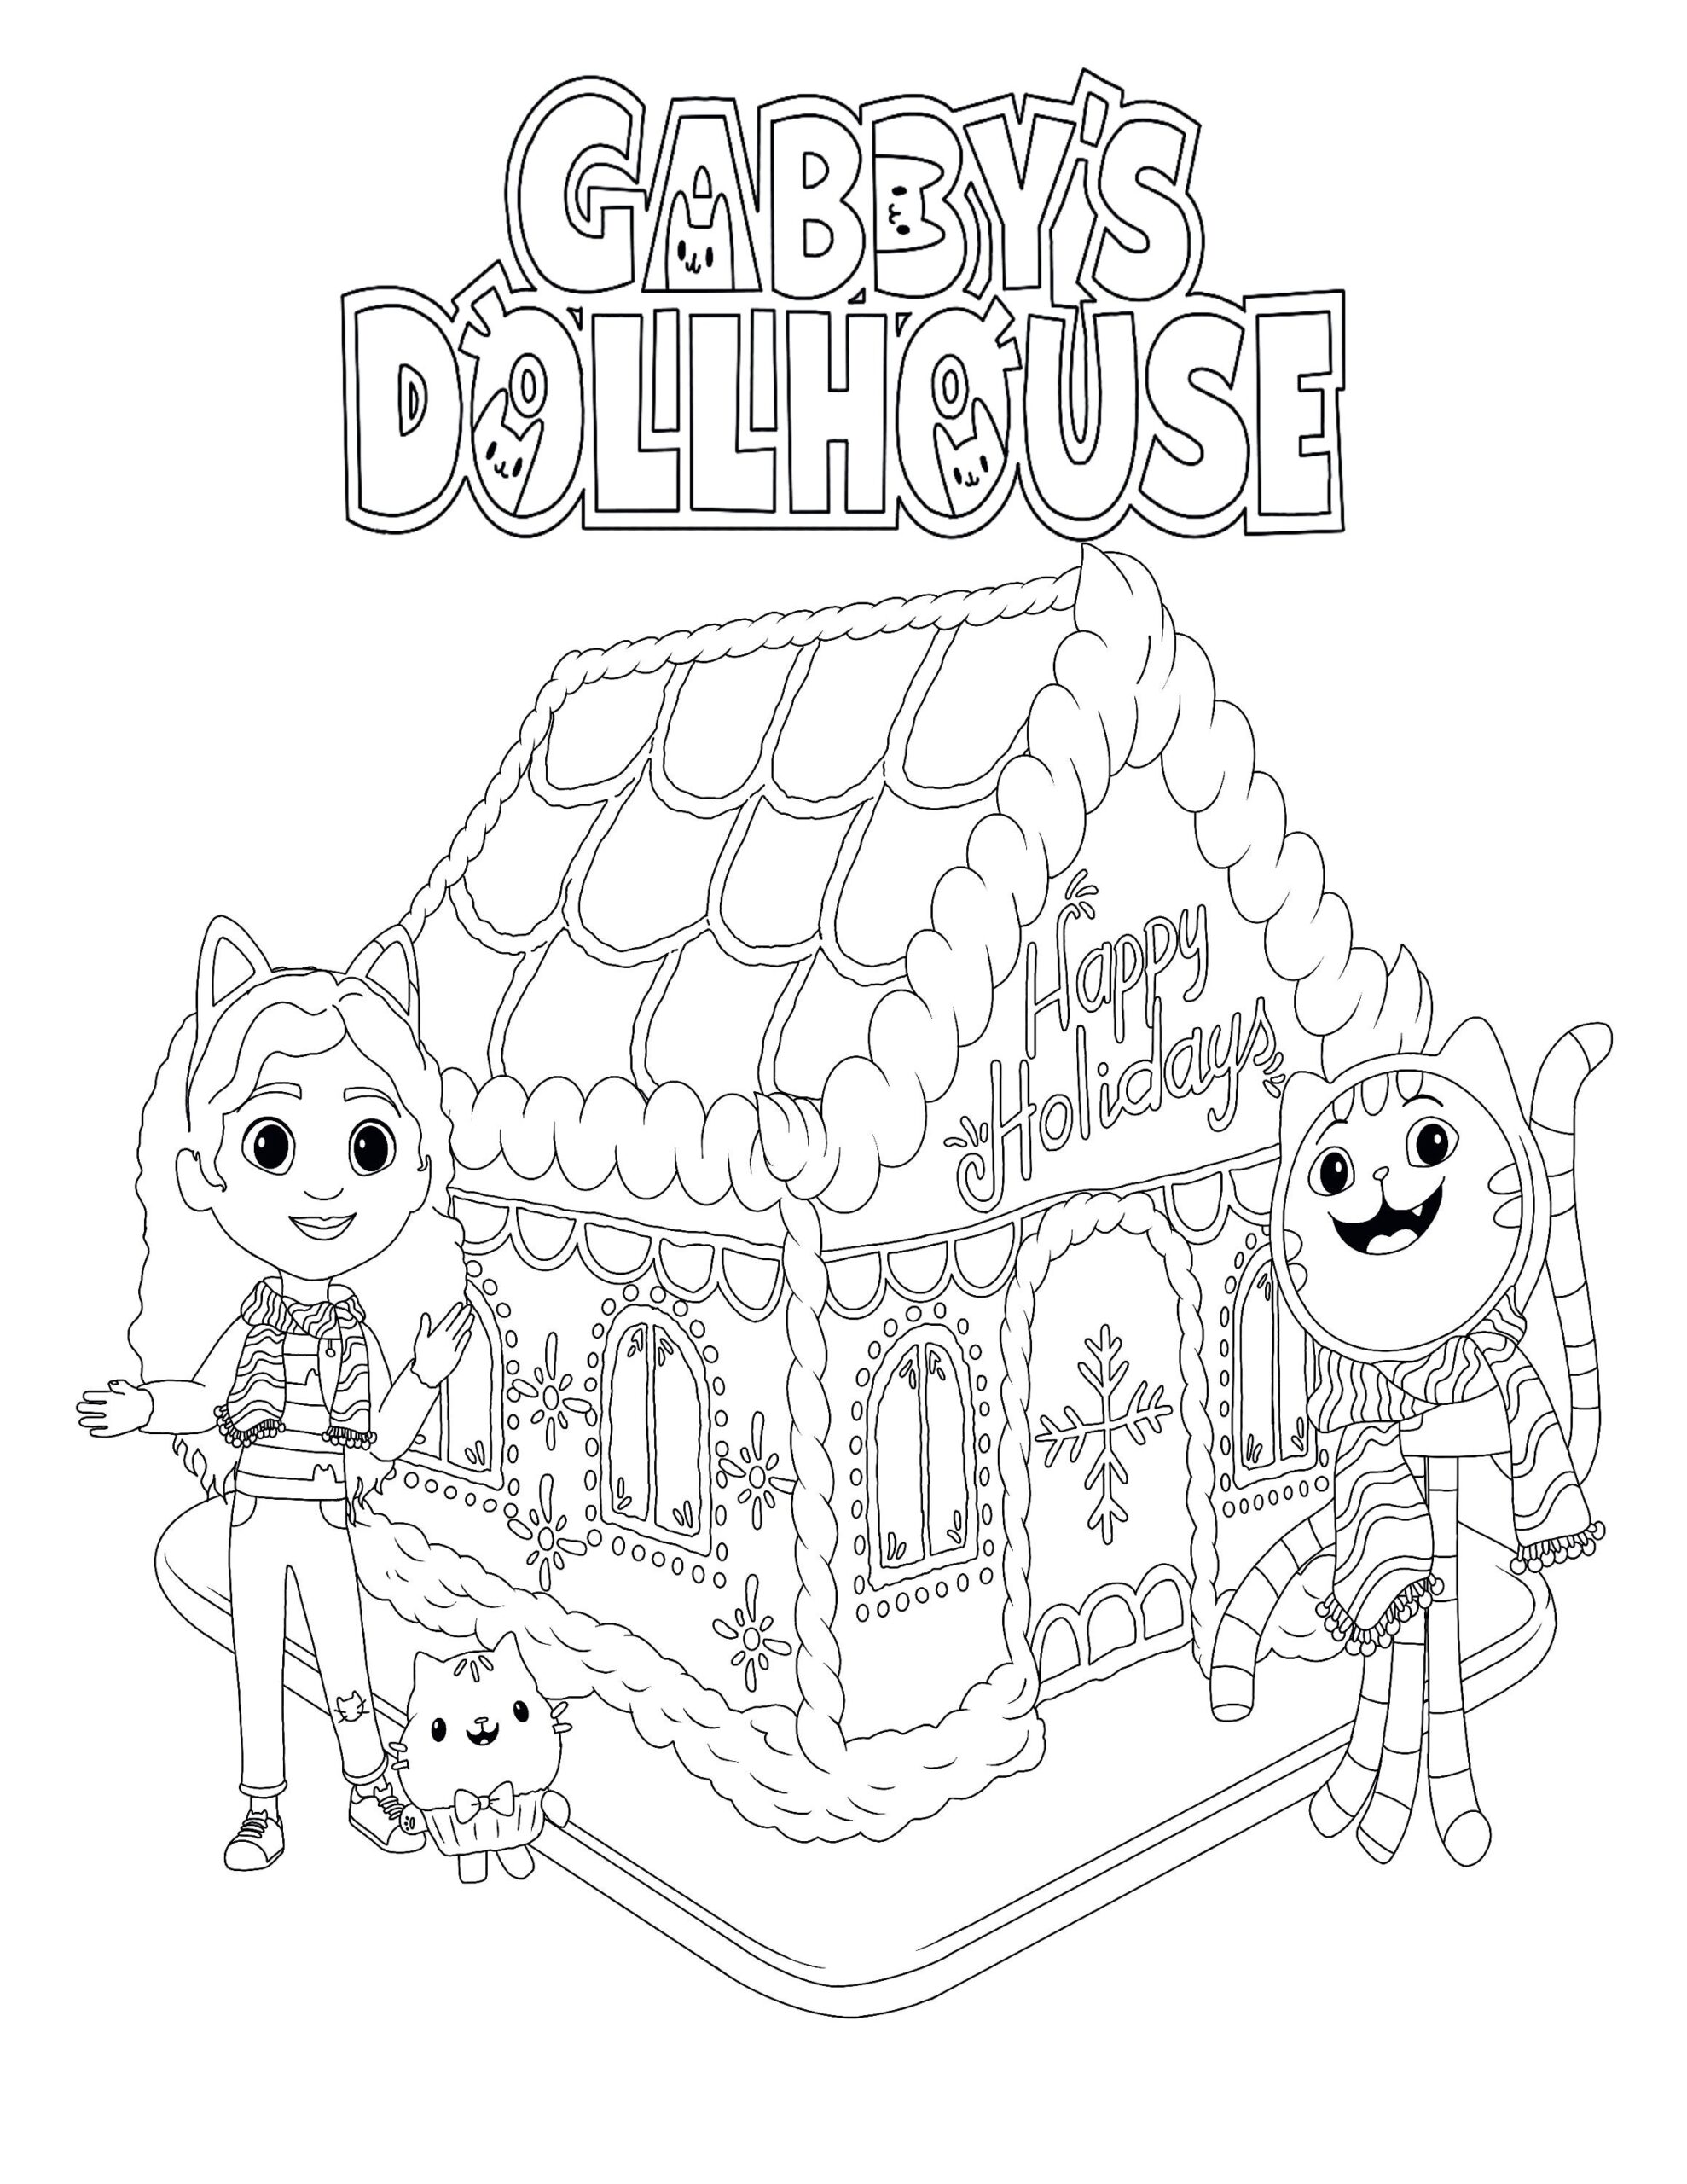 Gabby s Dollhouse Coloring Pages Ubicaciondepersonas cdmx gob mx